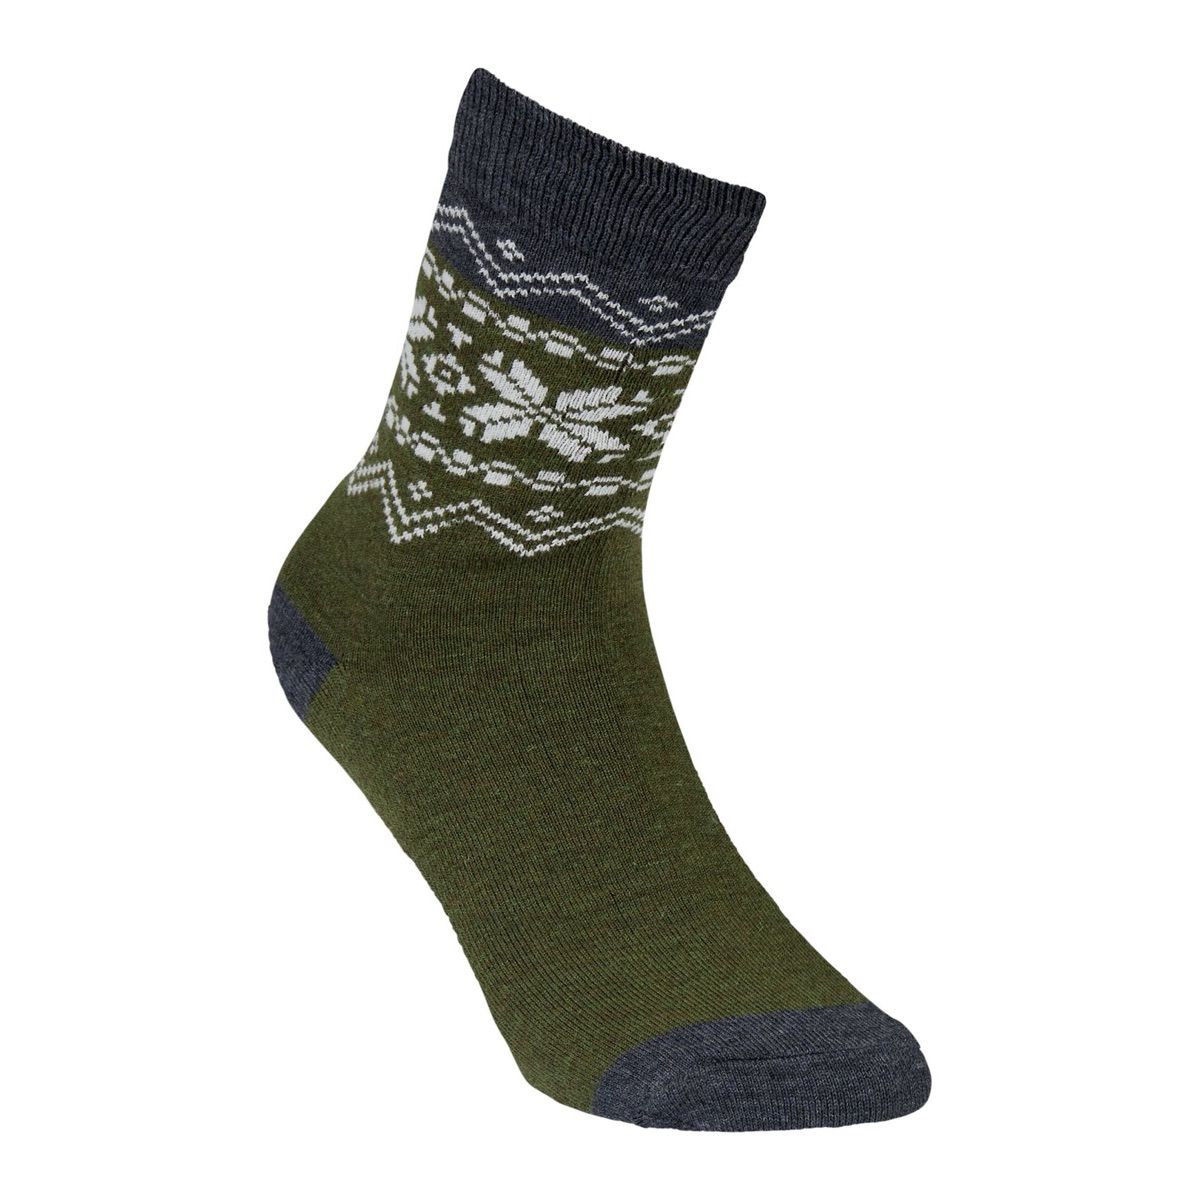 Gridarmor Heritage Merino Socks Green/Grey/White